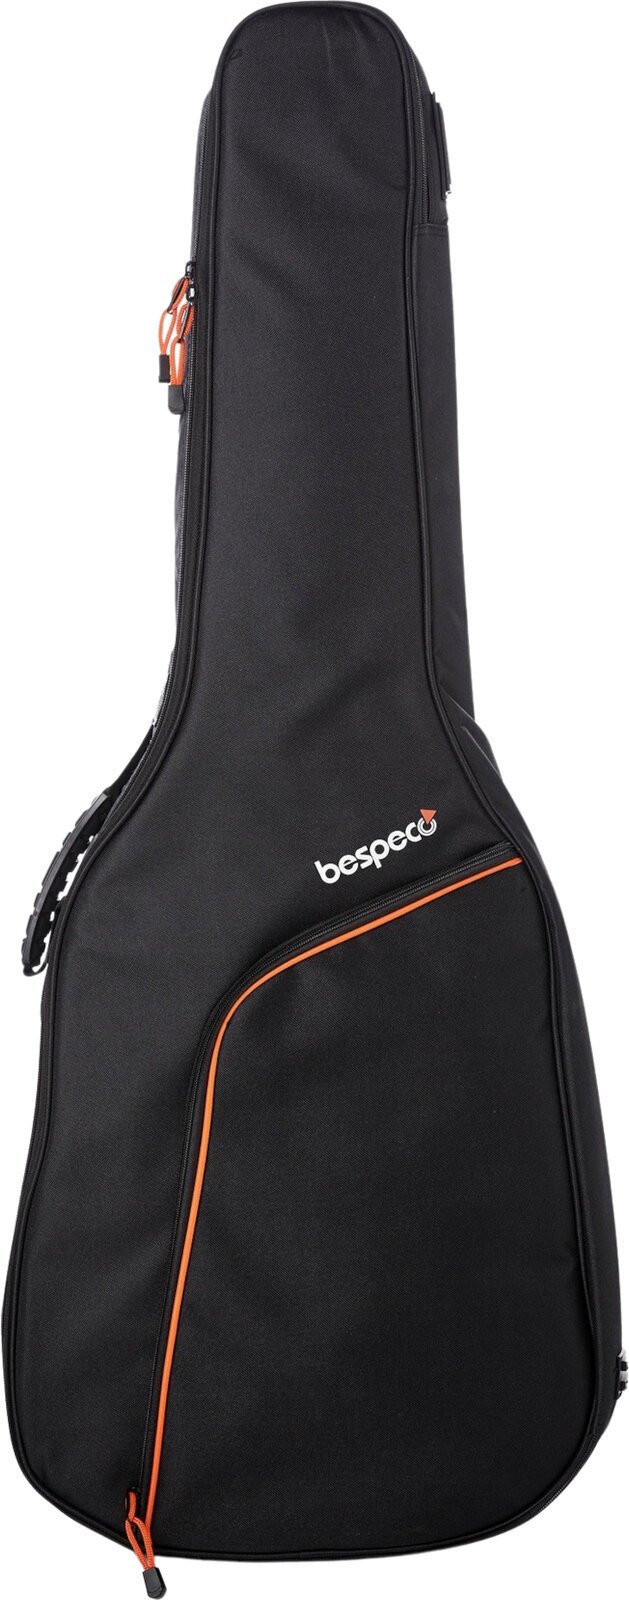 Gigbag for Acoustic Guitar Bespeco BAG10AG Gigbag for Acoustic Guitar Black